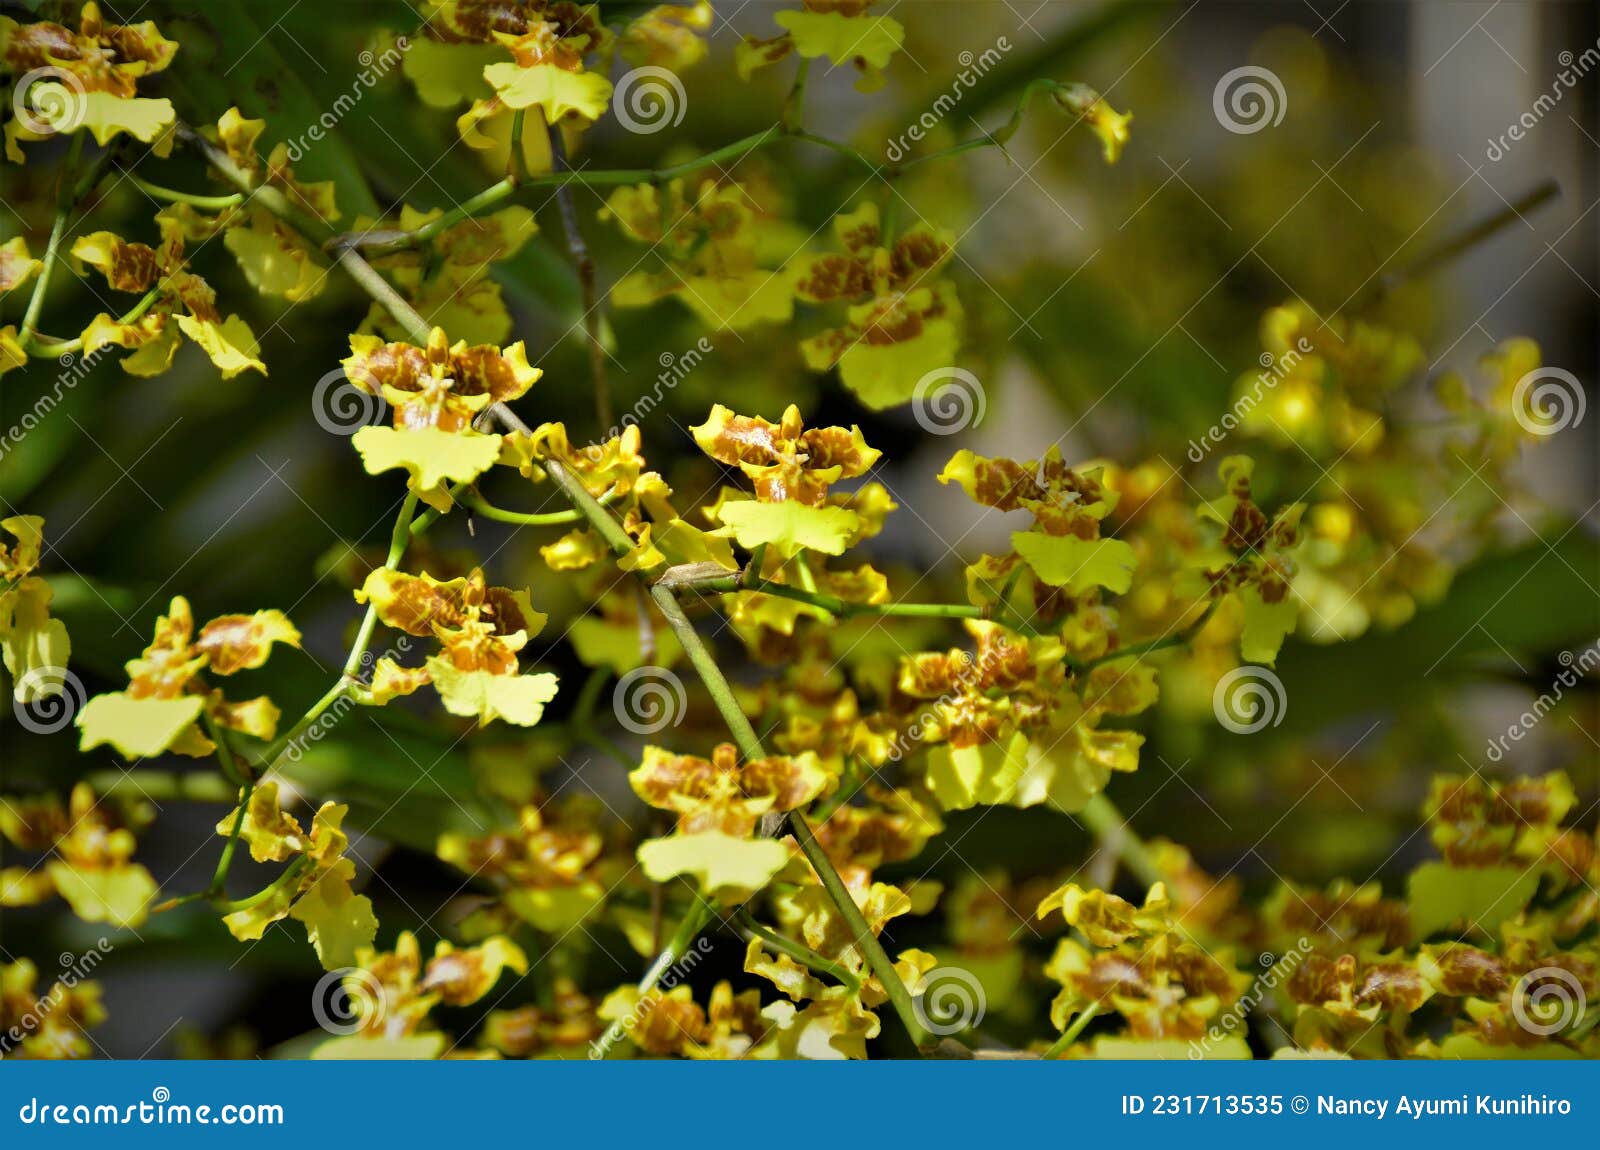 yellow oncidium orchid flowers